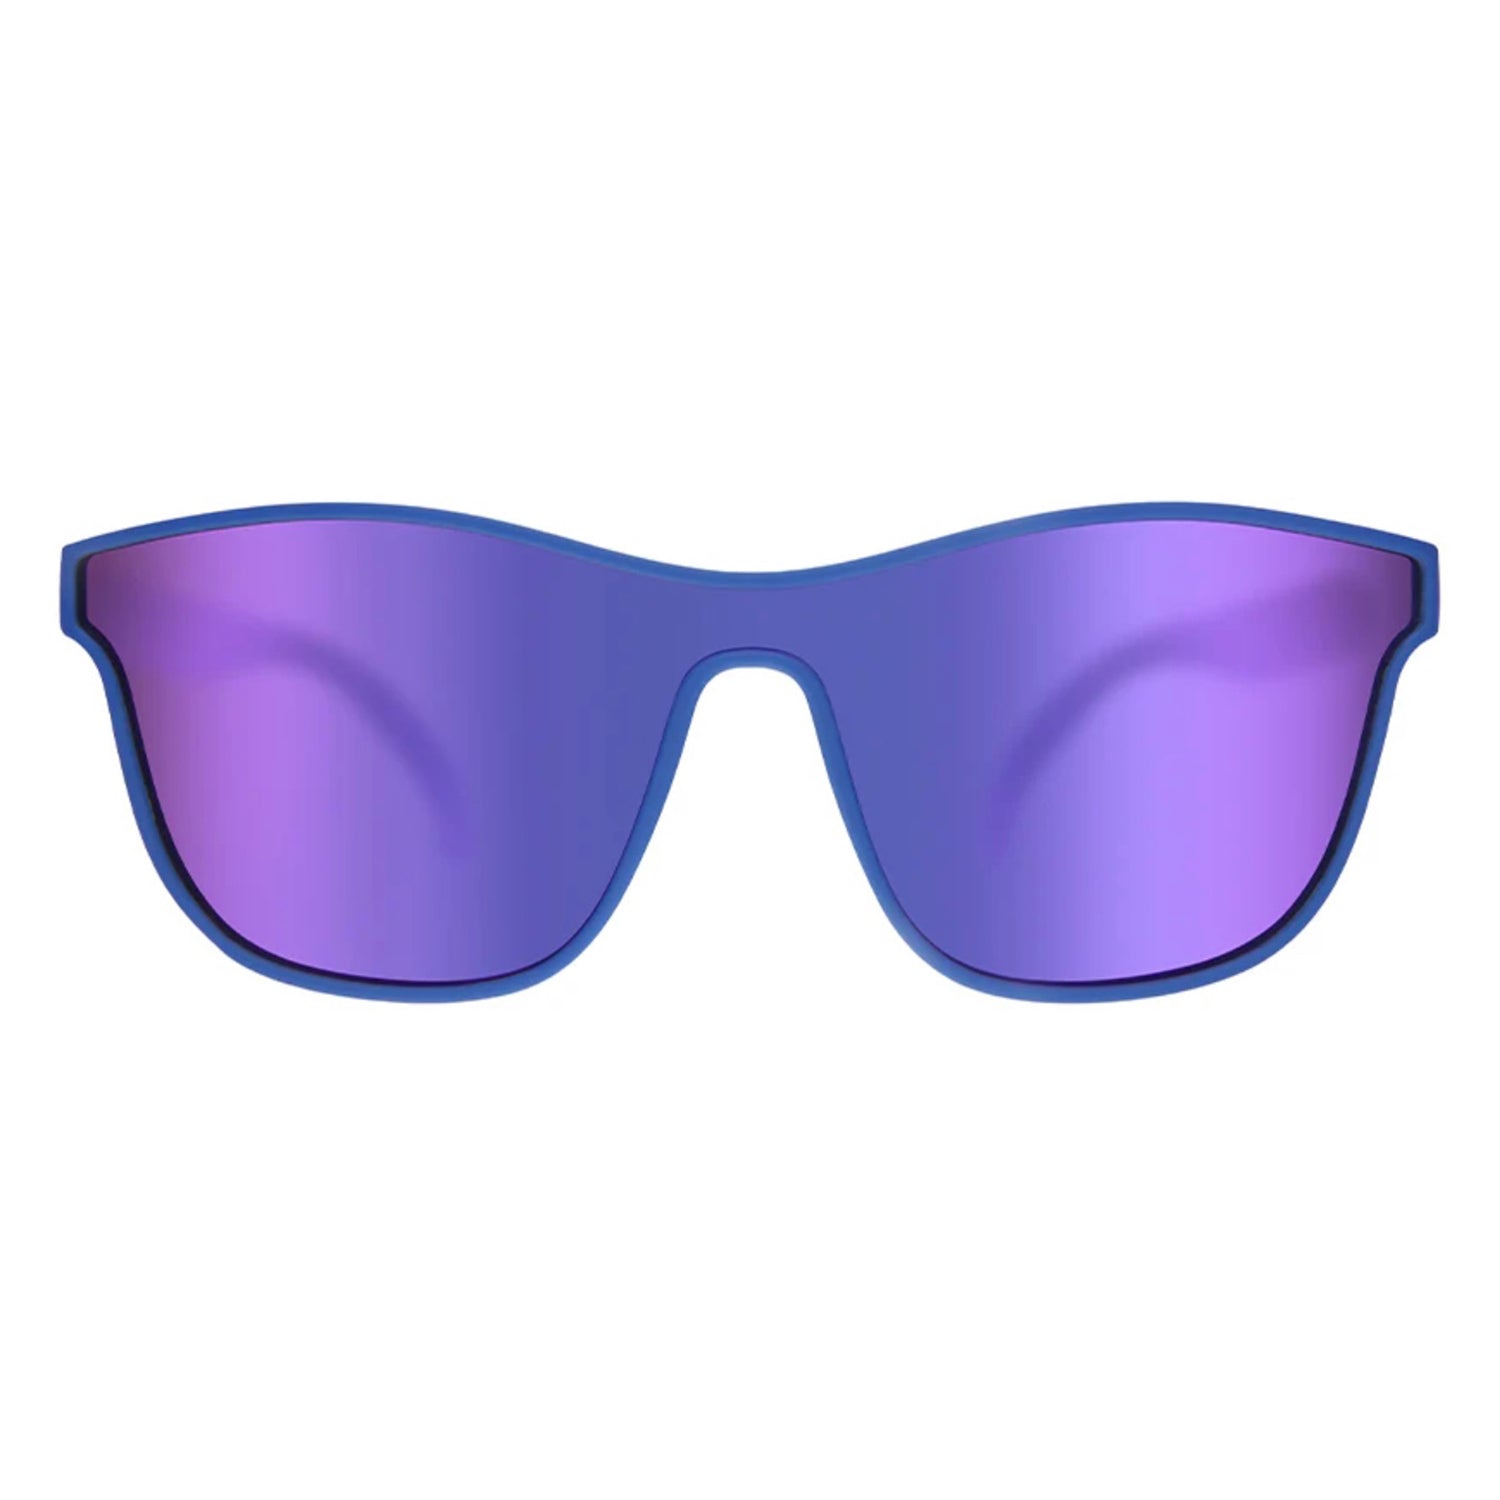 Goodr Sunglasses - Best Dystopia Ever